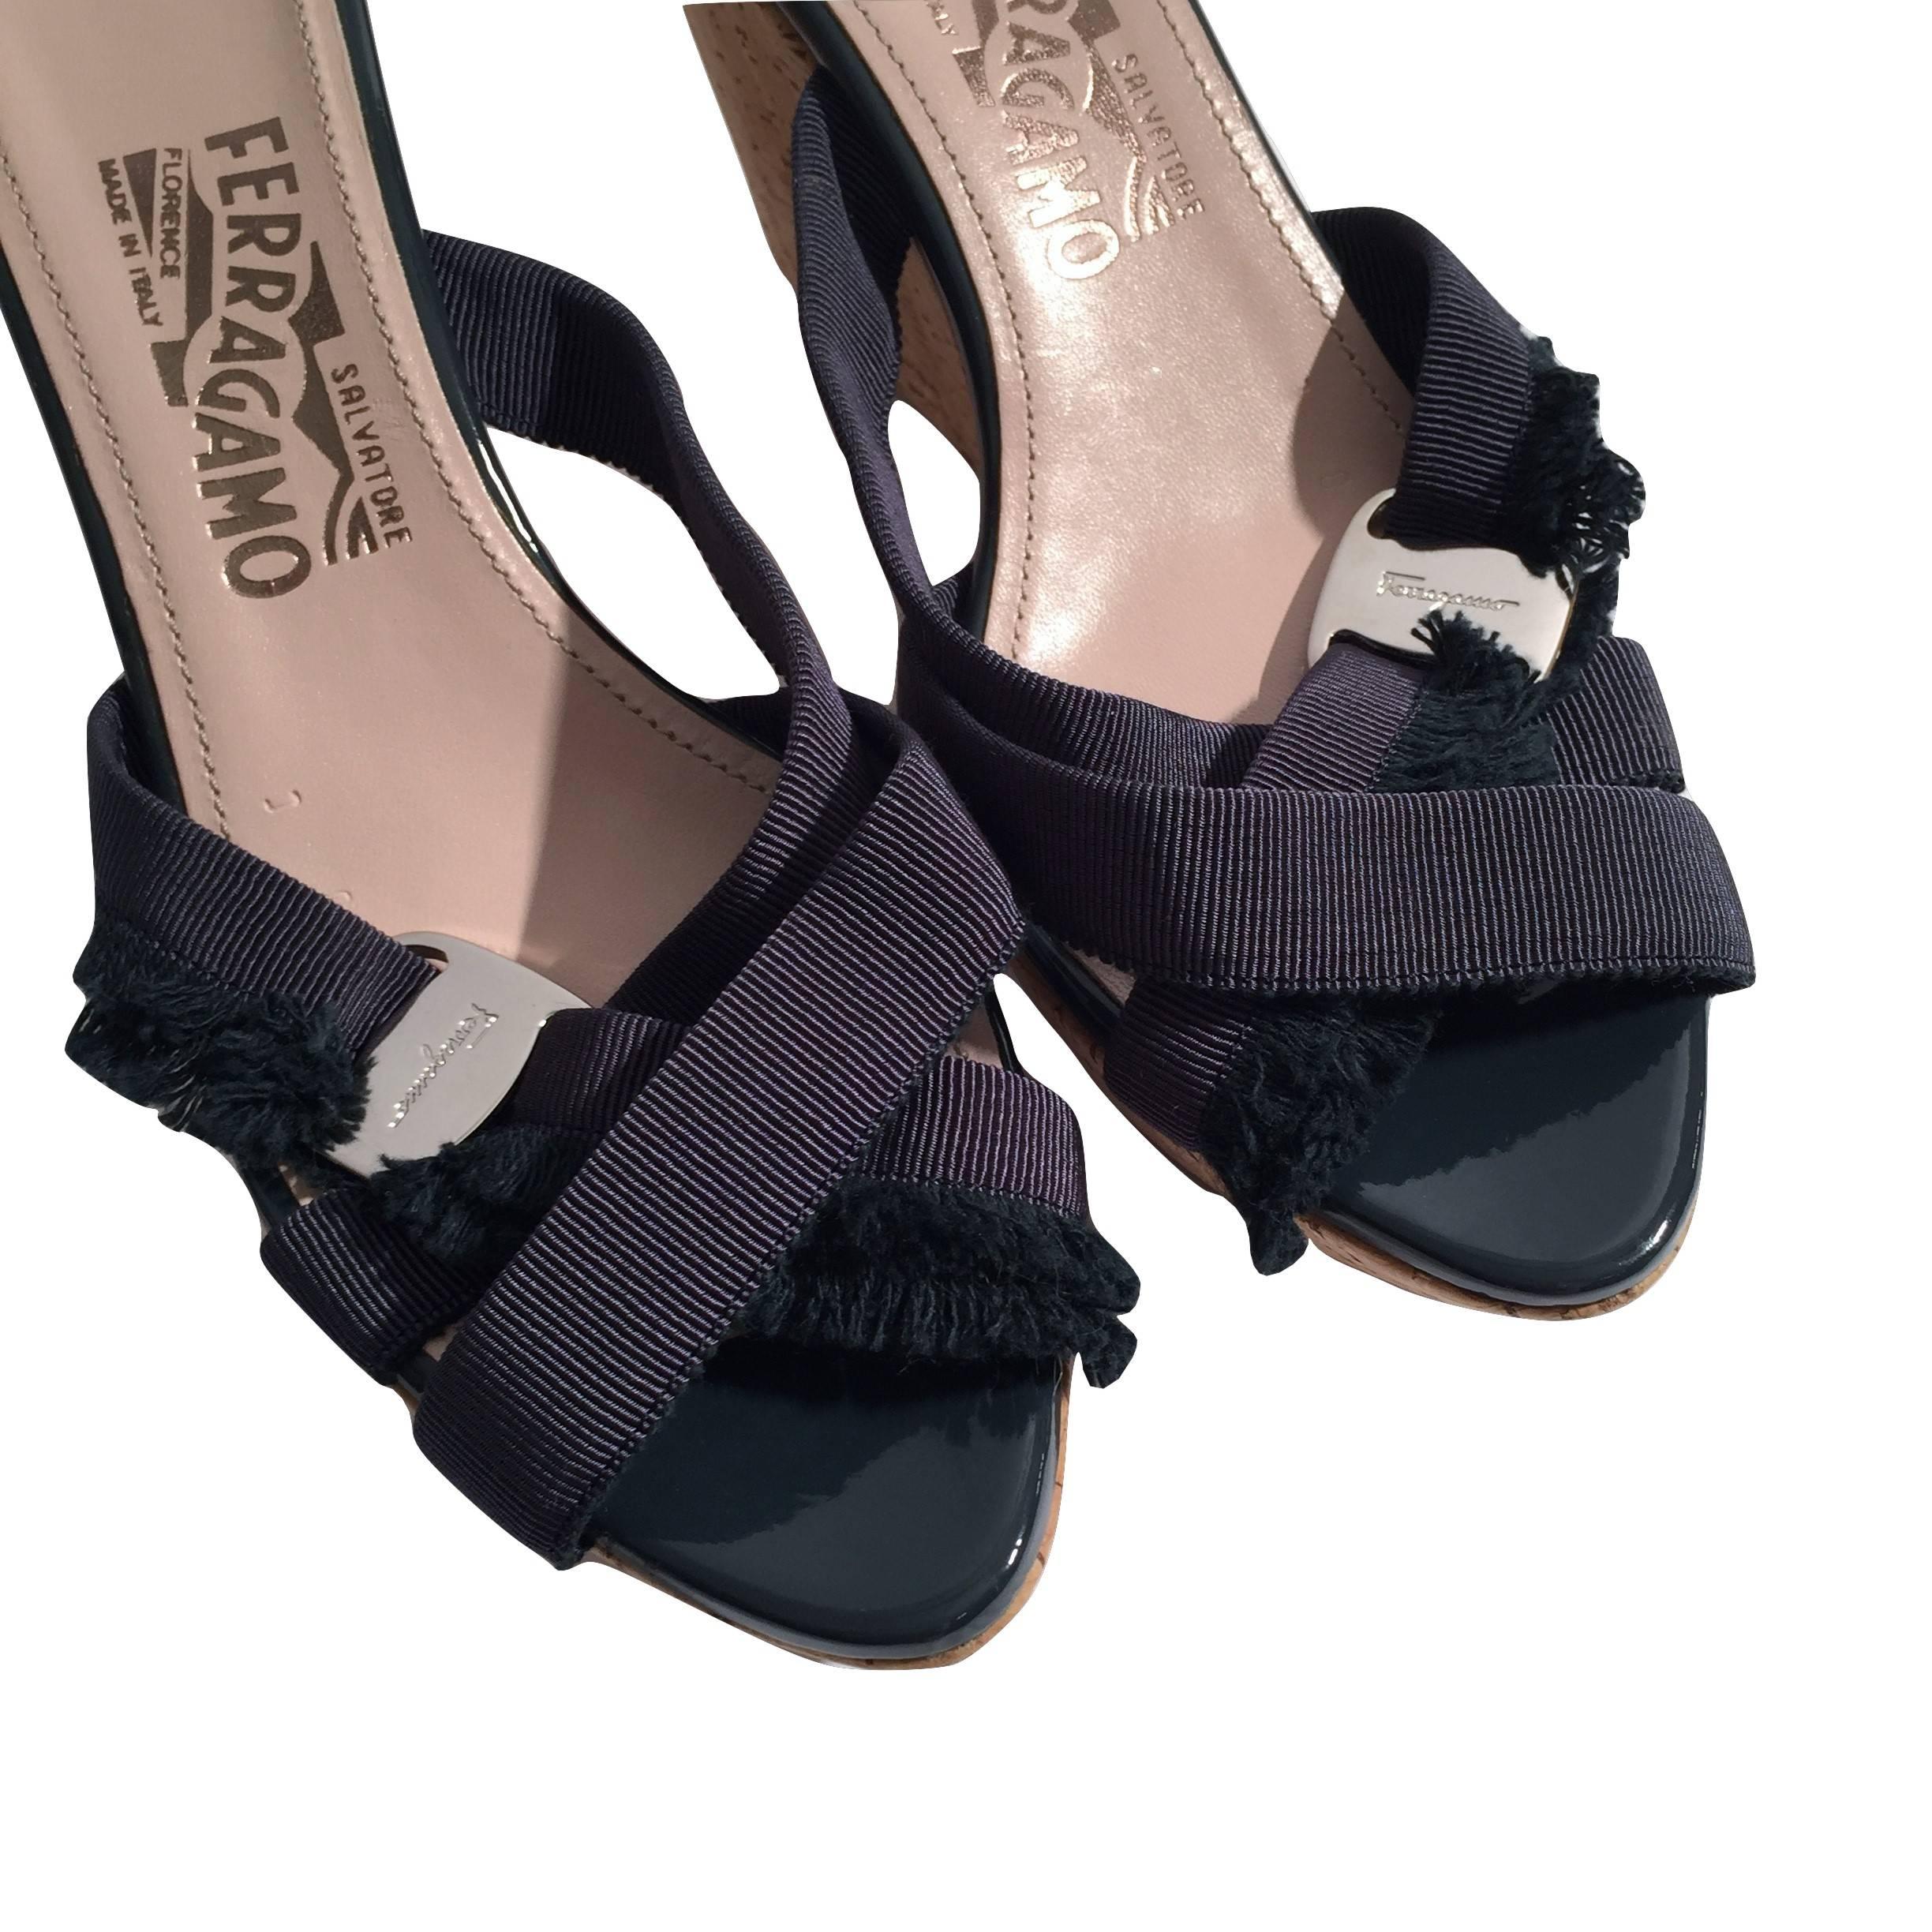 New Size 8 Salvatore Ferragamo Wedge Platform Heels 2